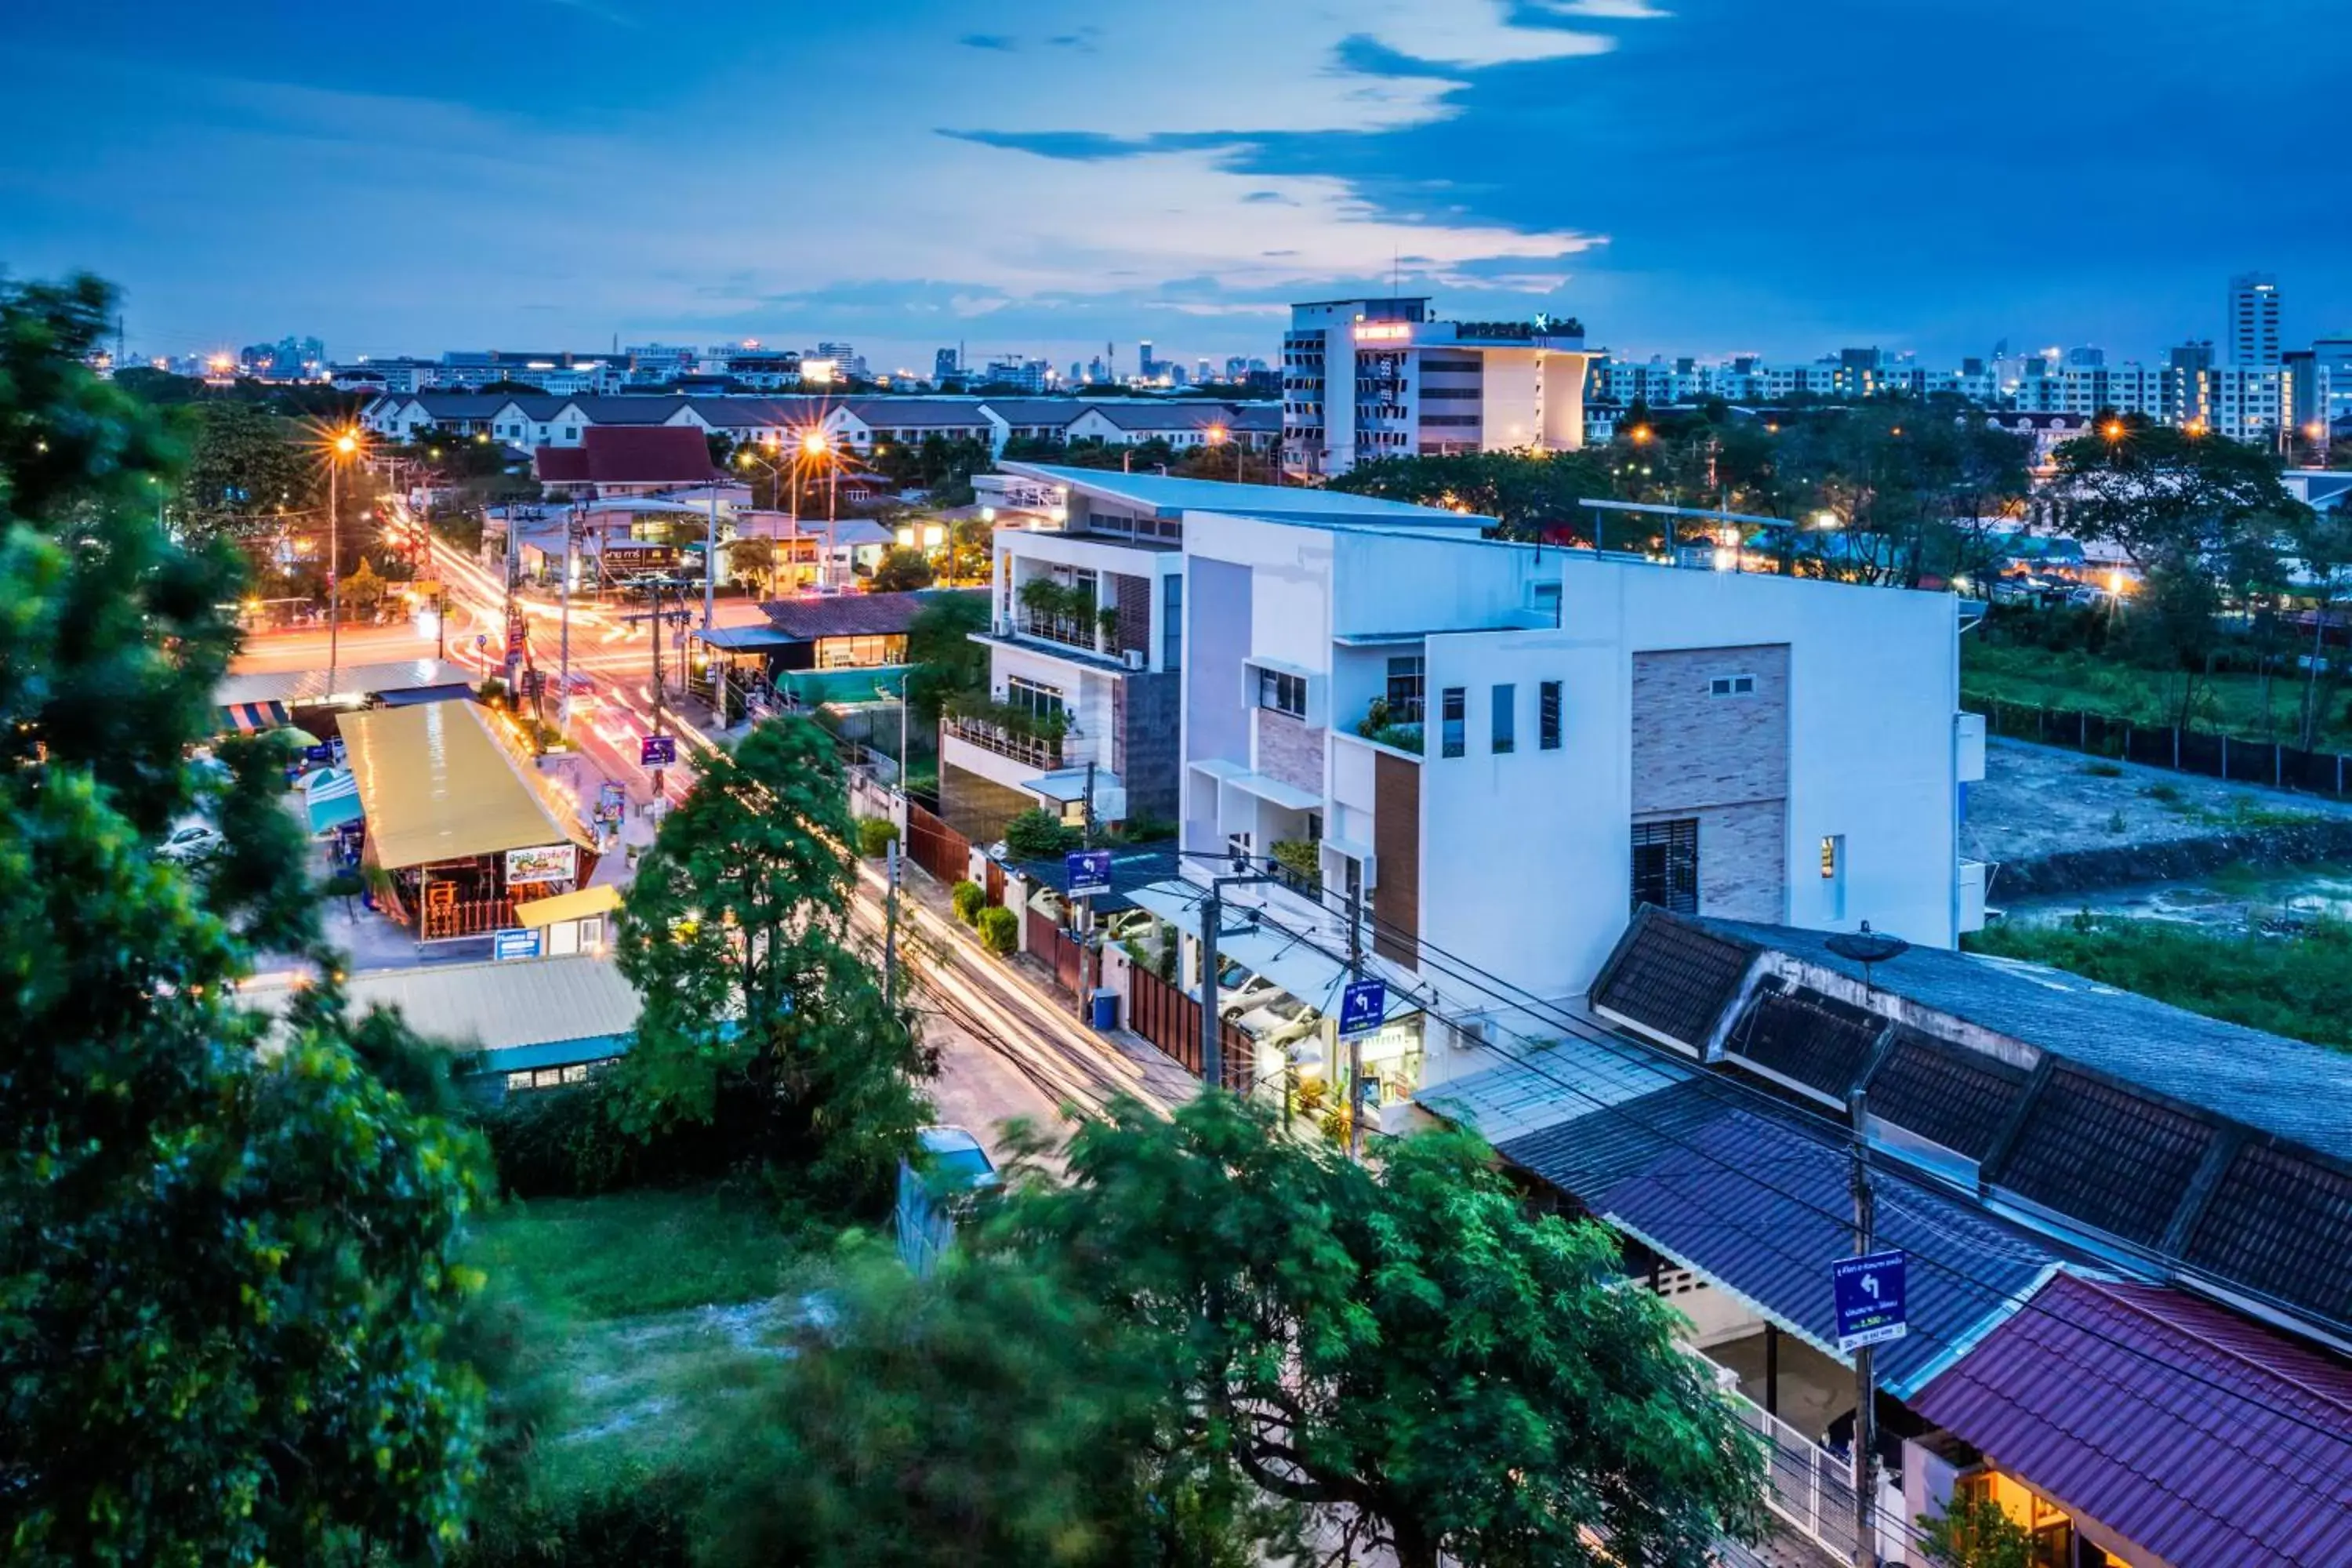 Off site, Bird's-eye View in Livotel Hotel Hua Mak Bangkok